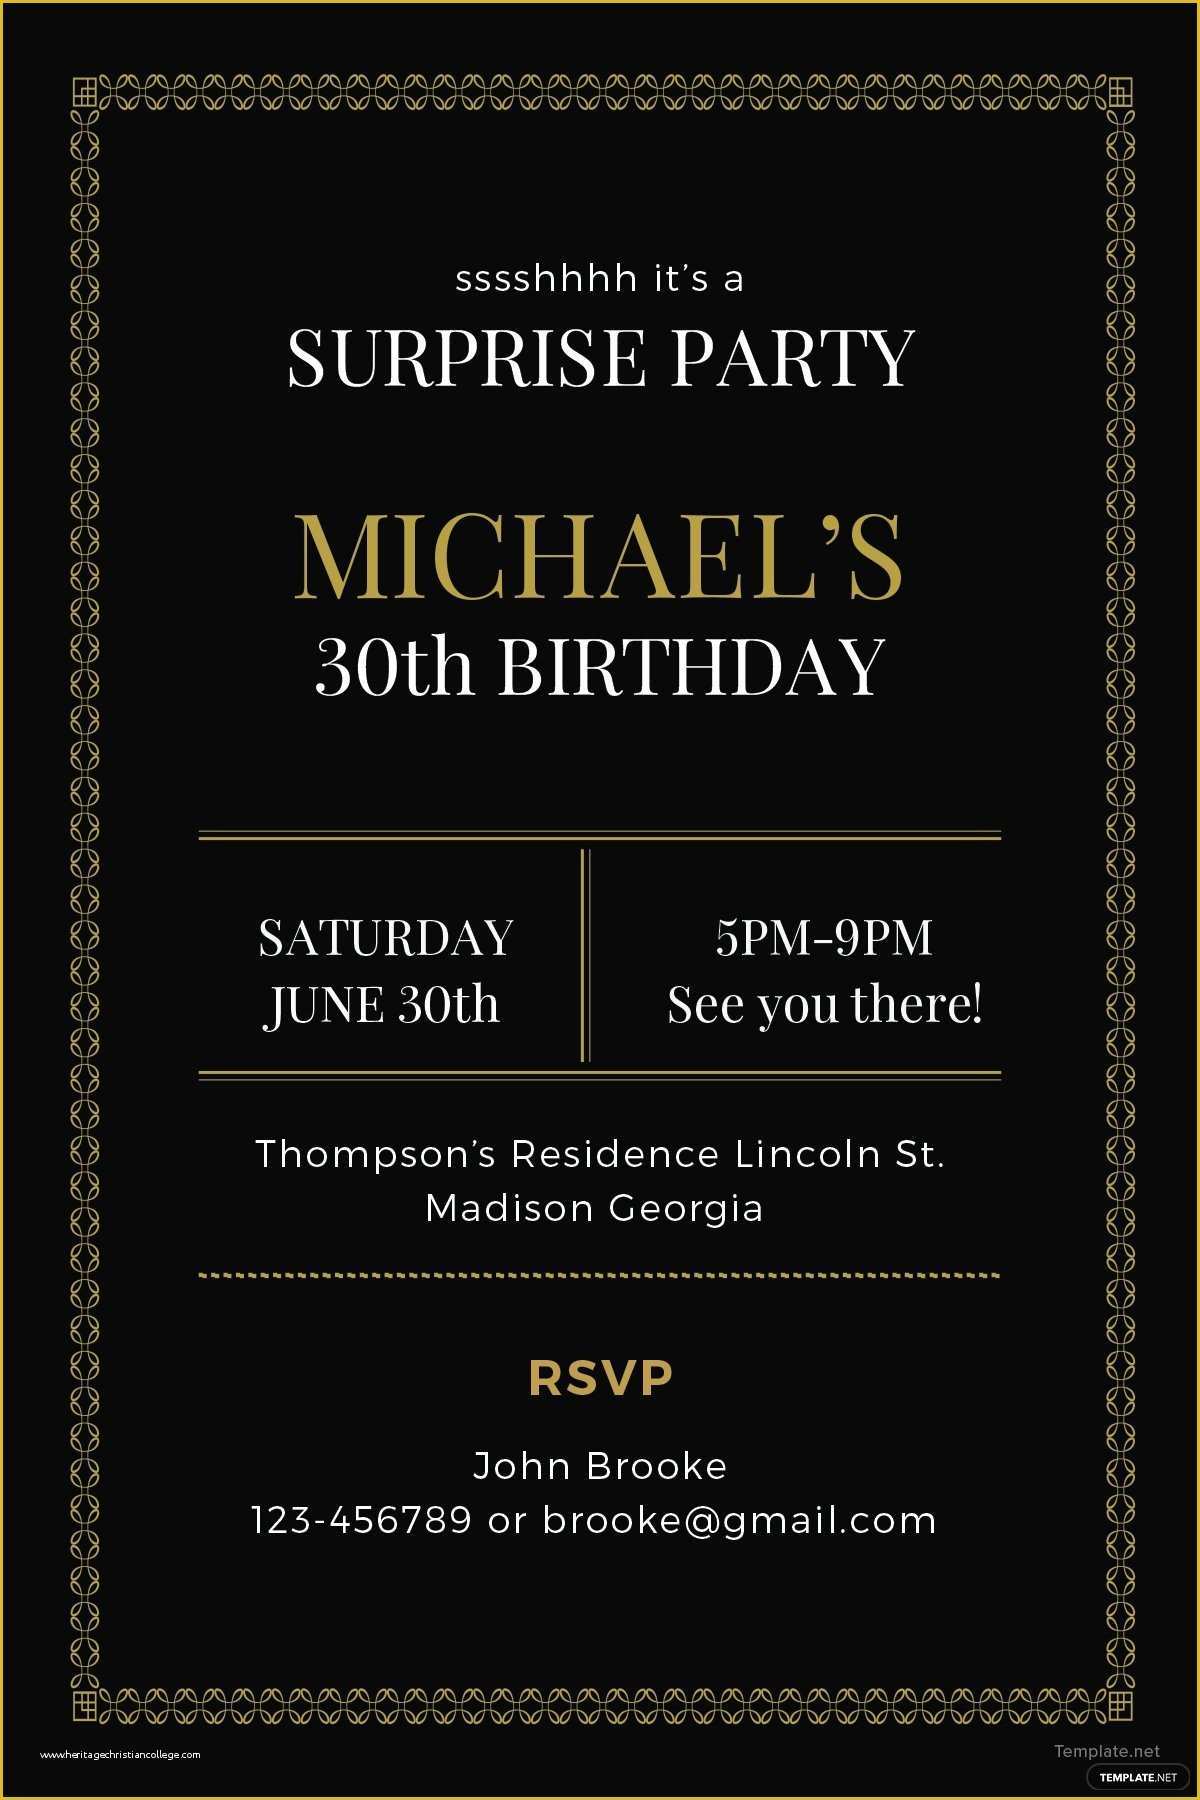 Surprise Birthday Invitations Templates Free Of Free Surprise Party Invitation Template In Adobe